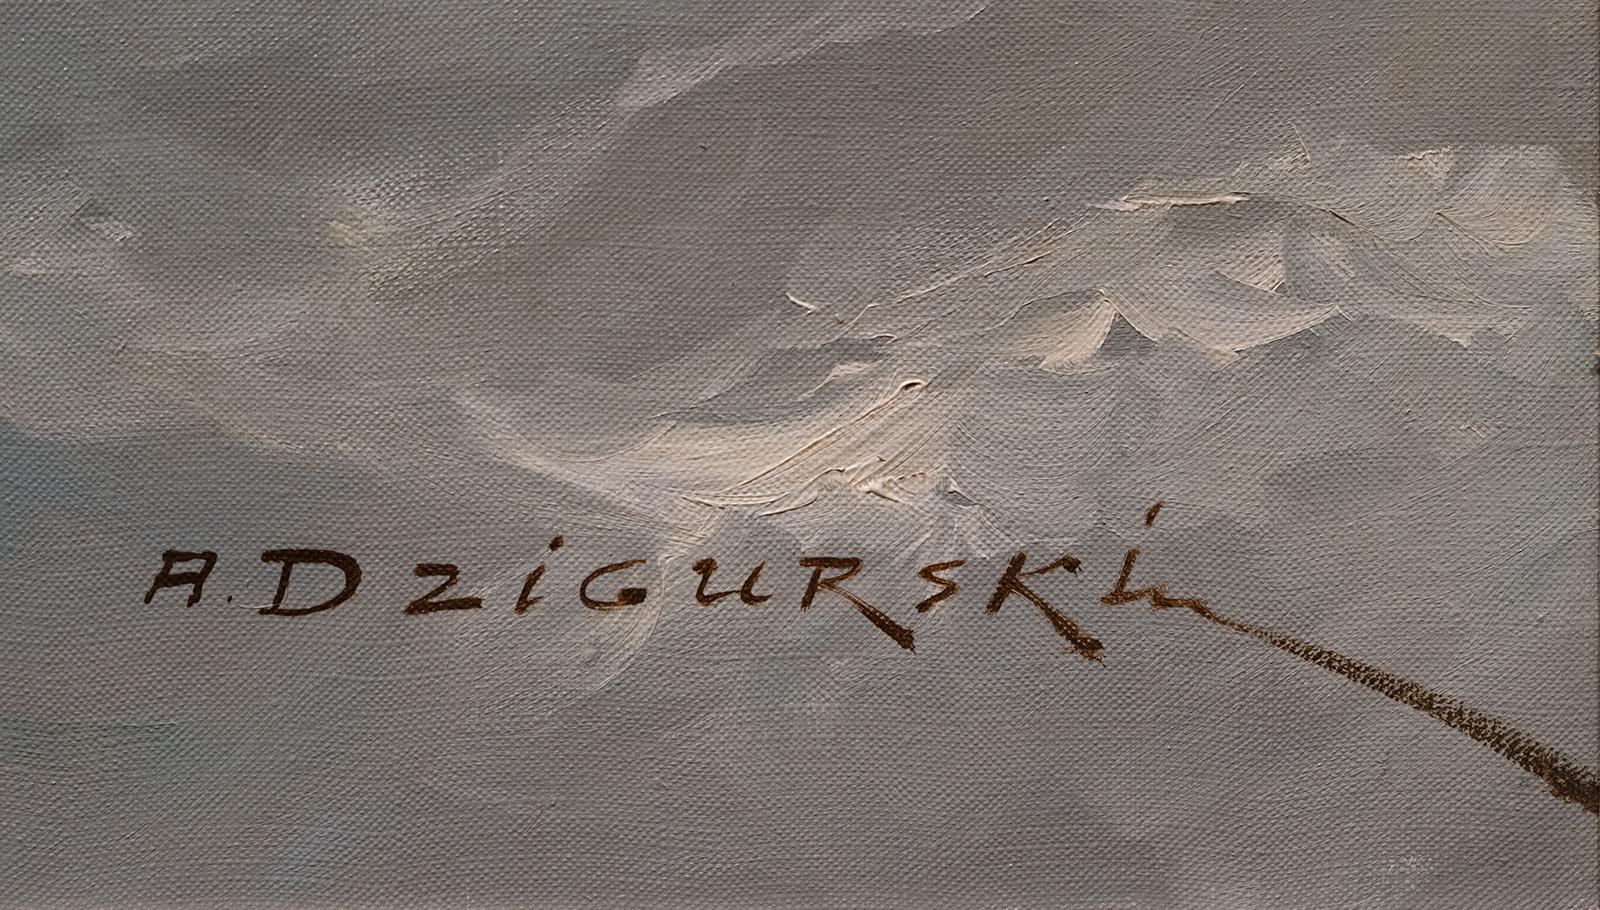 a dzigurski paintings